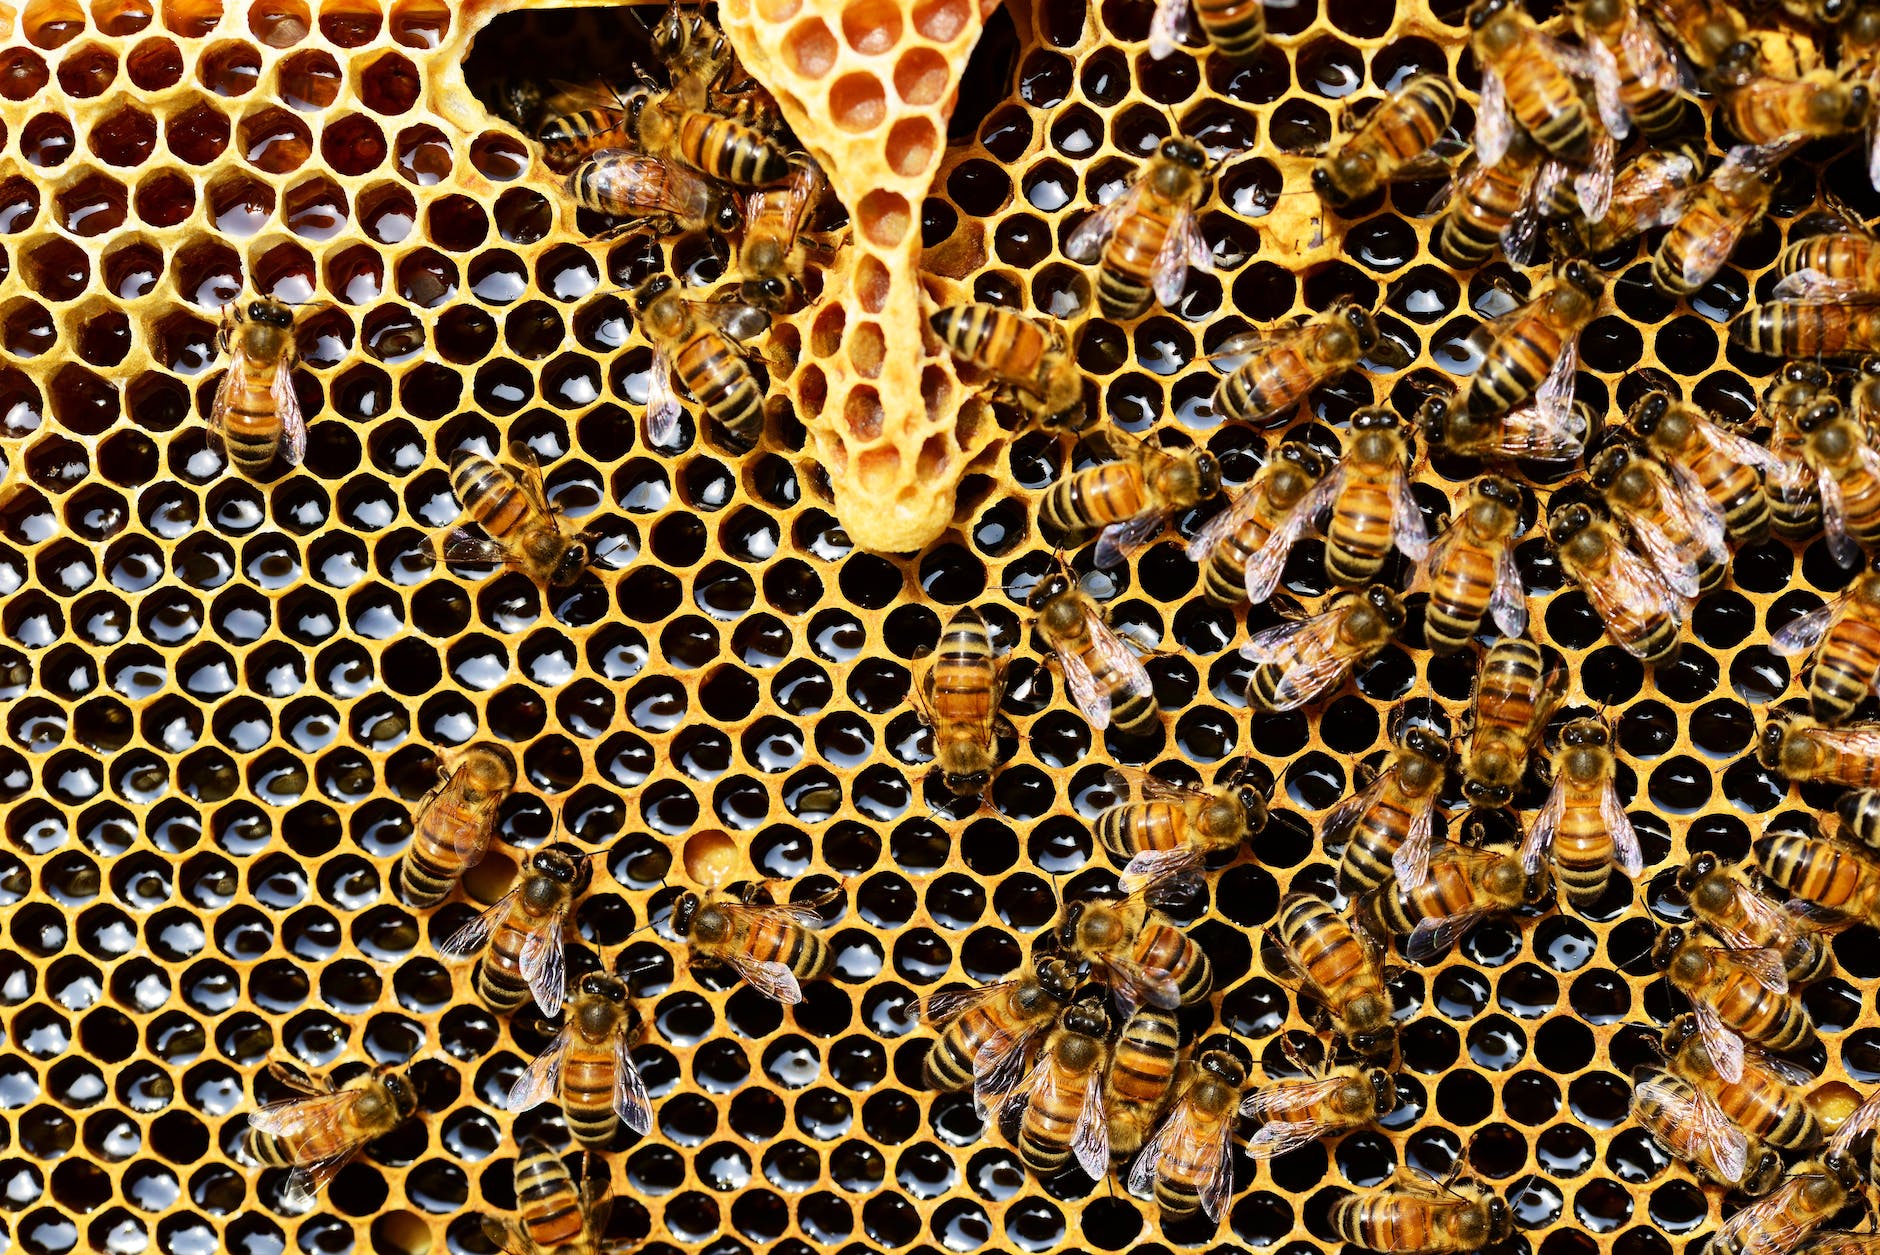 Centros de acopio de miel van lentos: Ramírez Marín